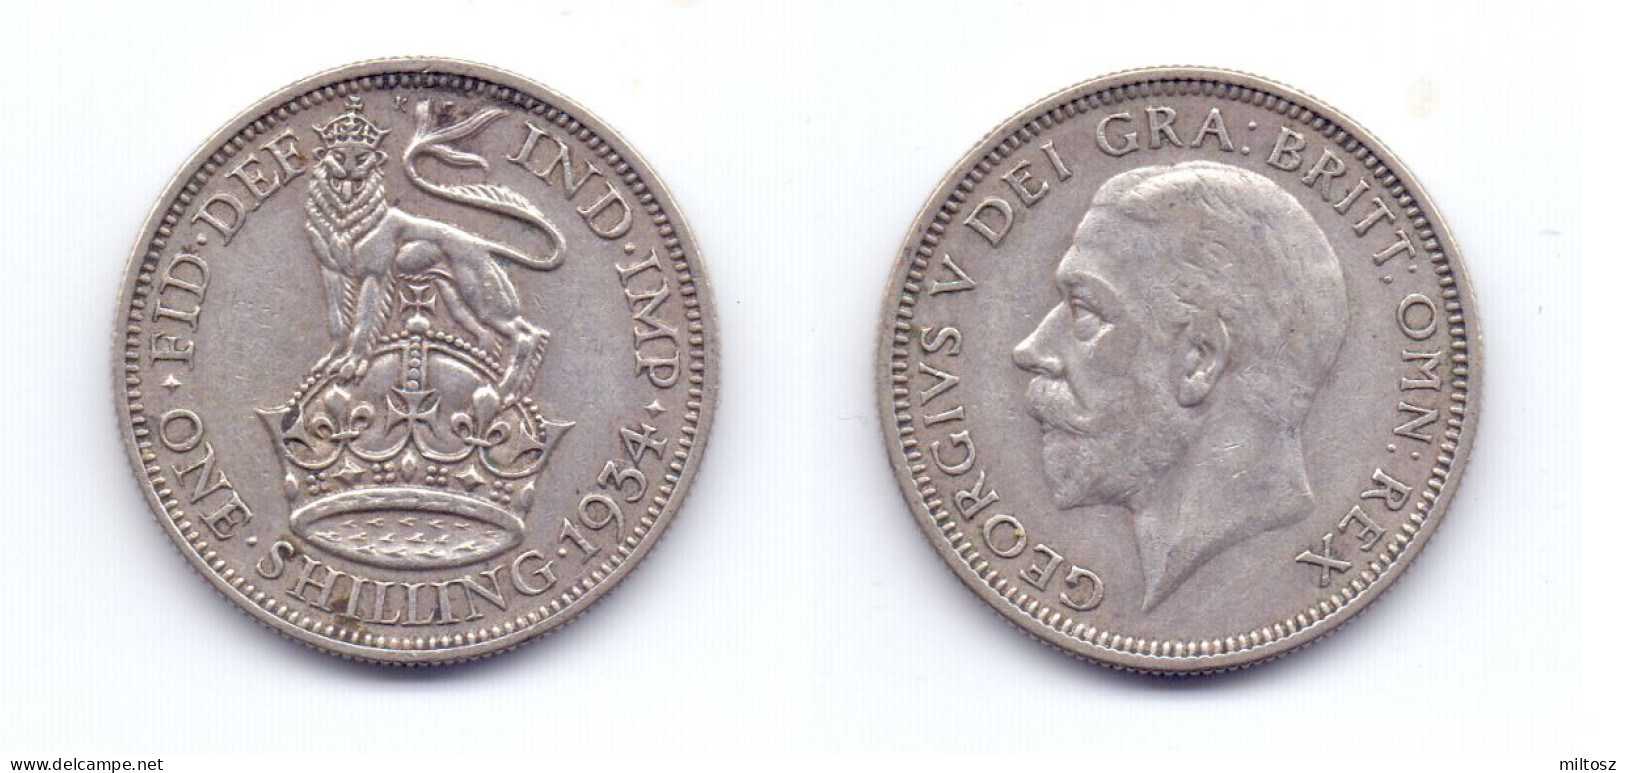 Great Britain 1 Shilling 1934 - I. 1 Shilling